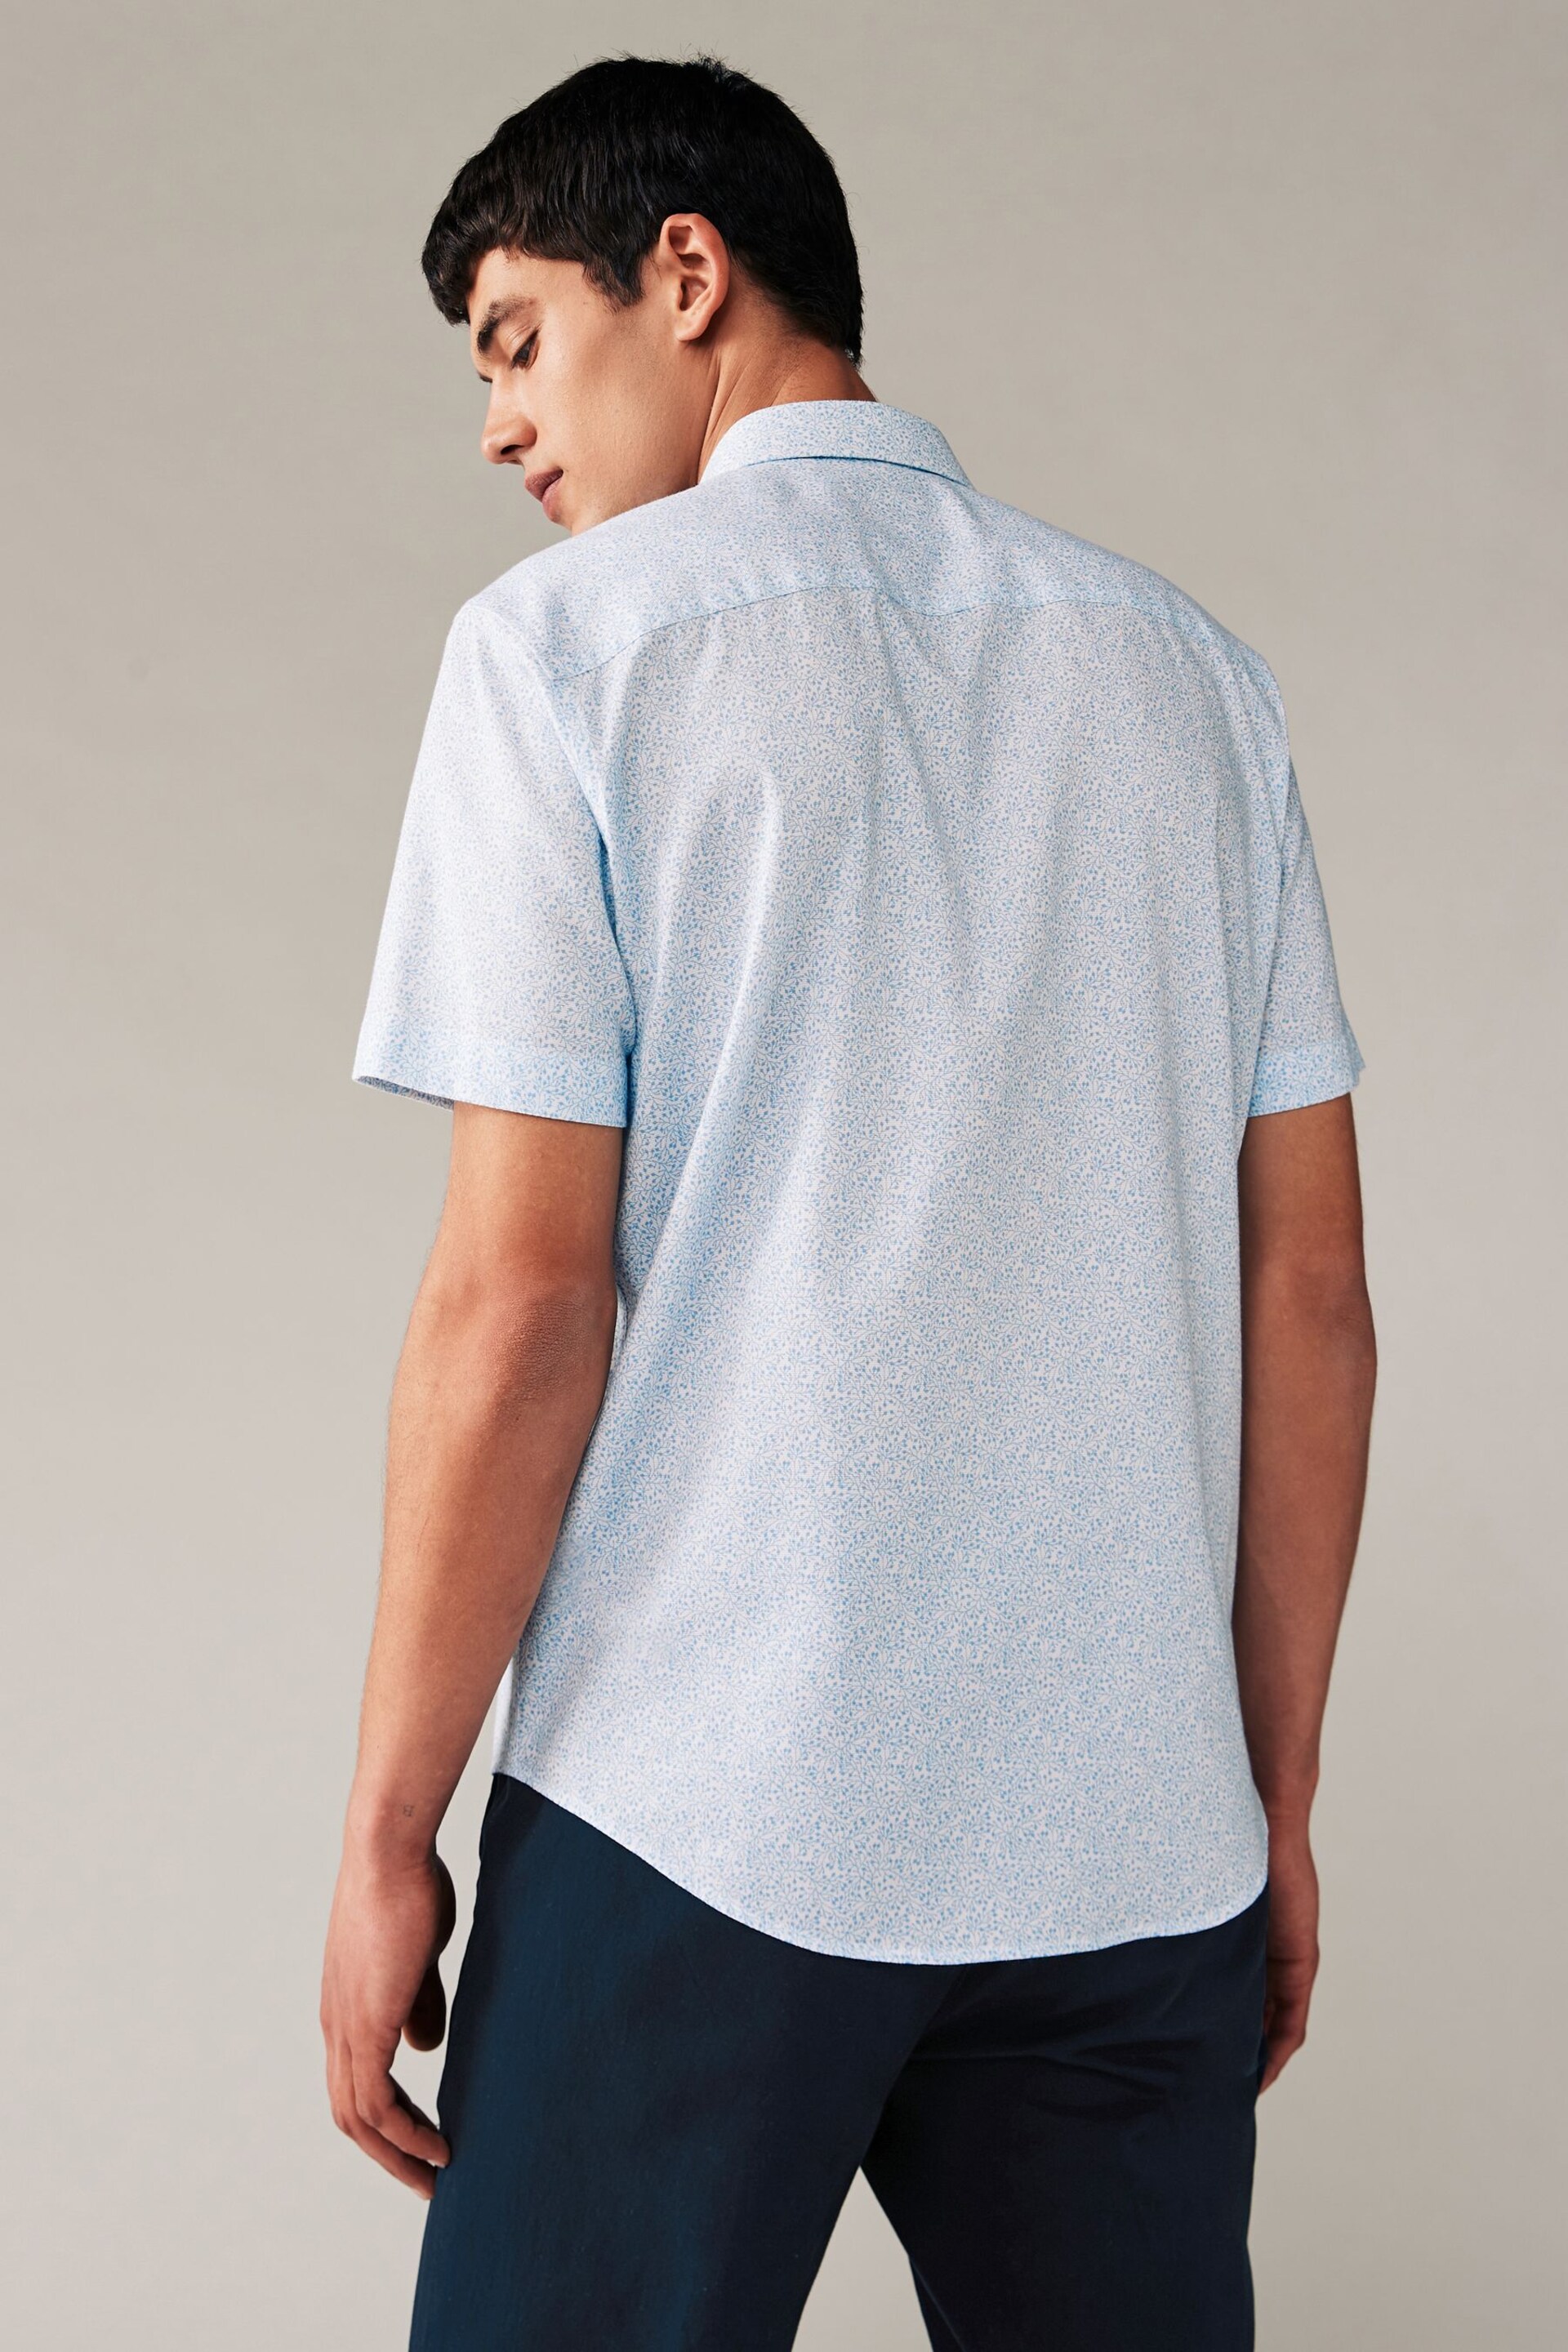 White/Light Blue Floral Textured Short Sleeve Shirt - Image 4 of 7